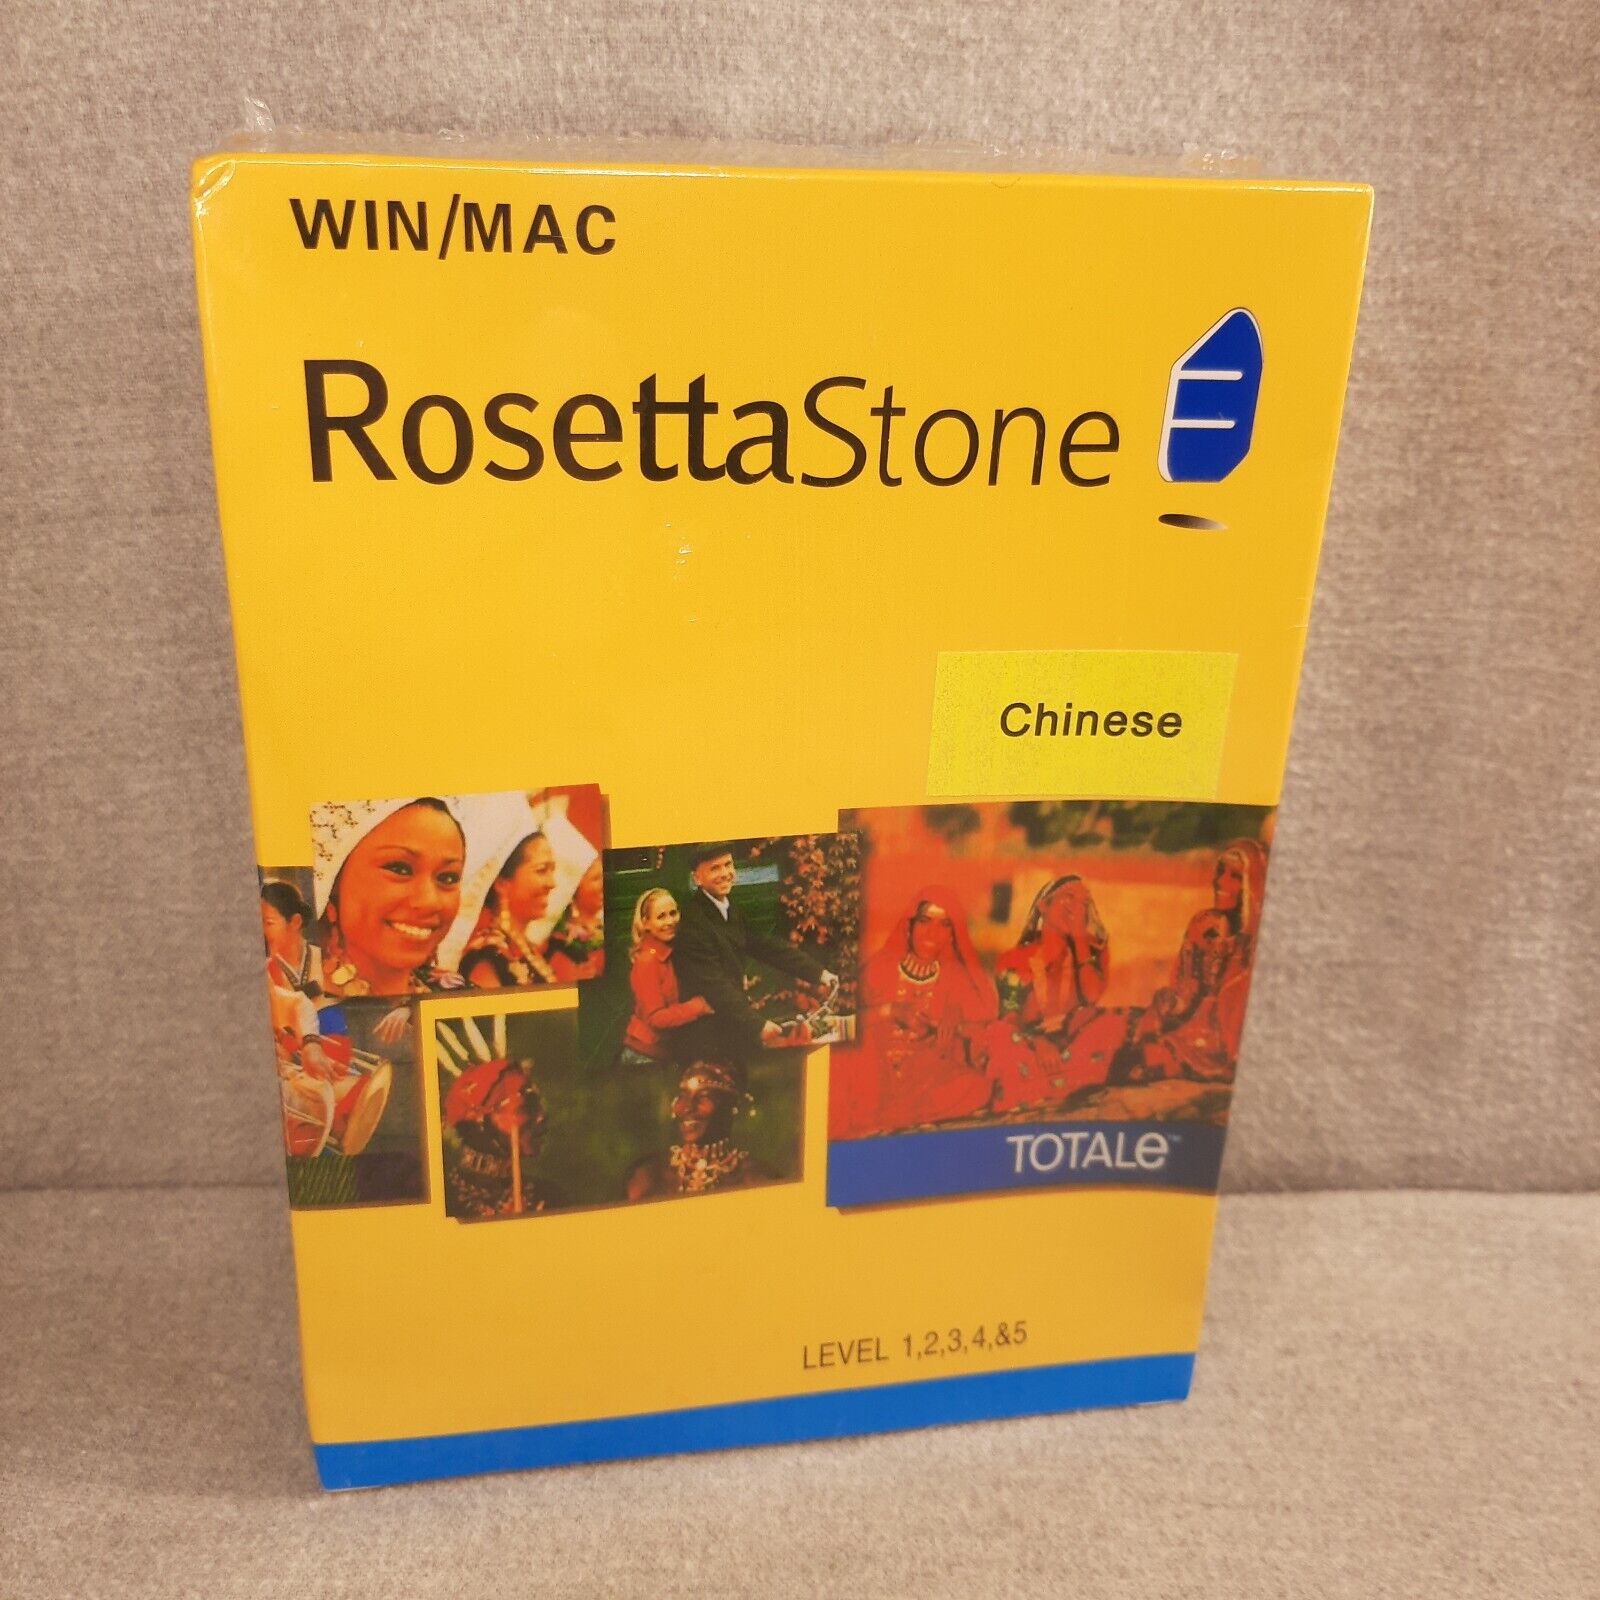 Rosetta Stone Chinese Windows Mac Levels 1, 2, 3, 4, 5 New/Factory Sealed (2011)